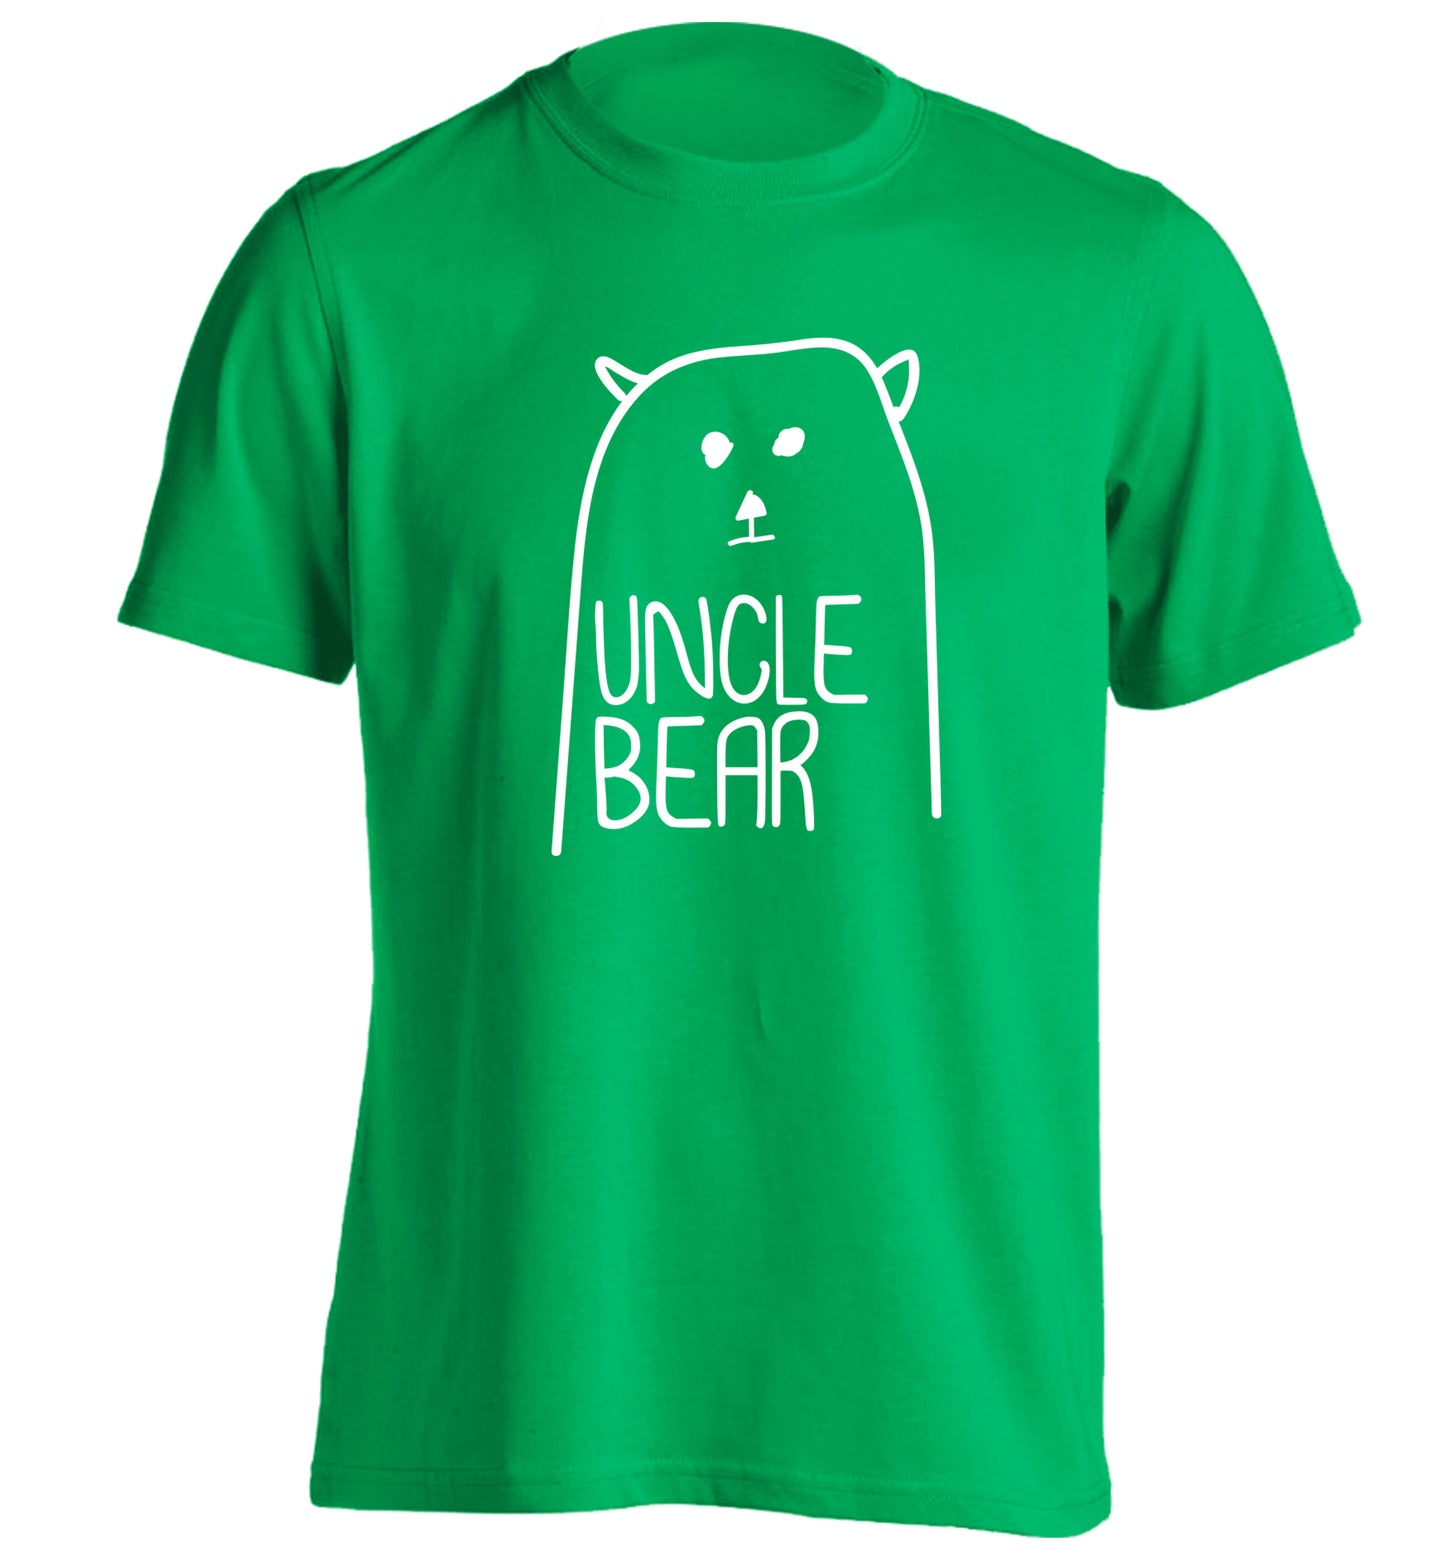 Uncle bear adults unisex green Tshirt 2XL